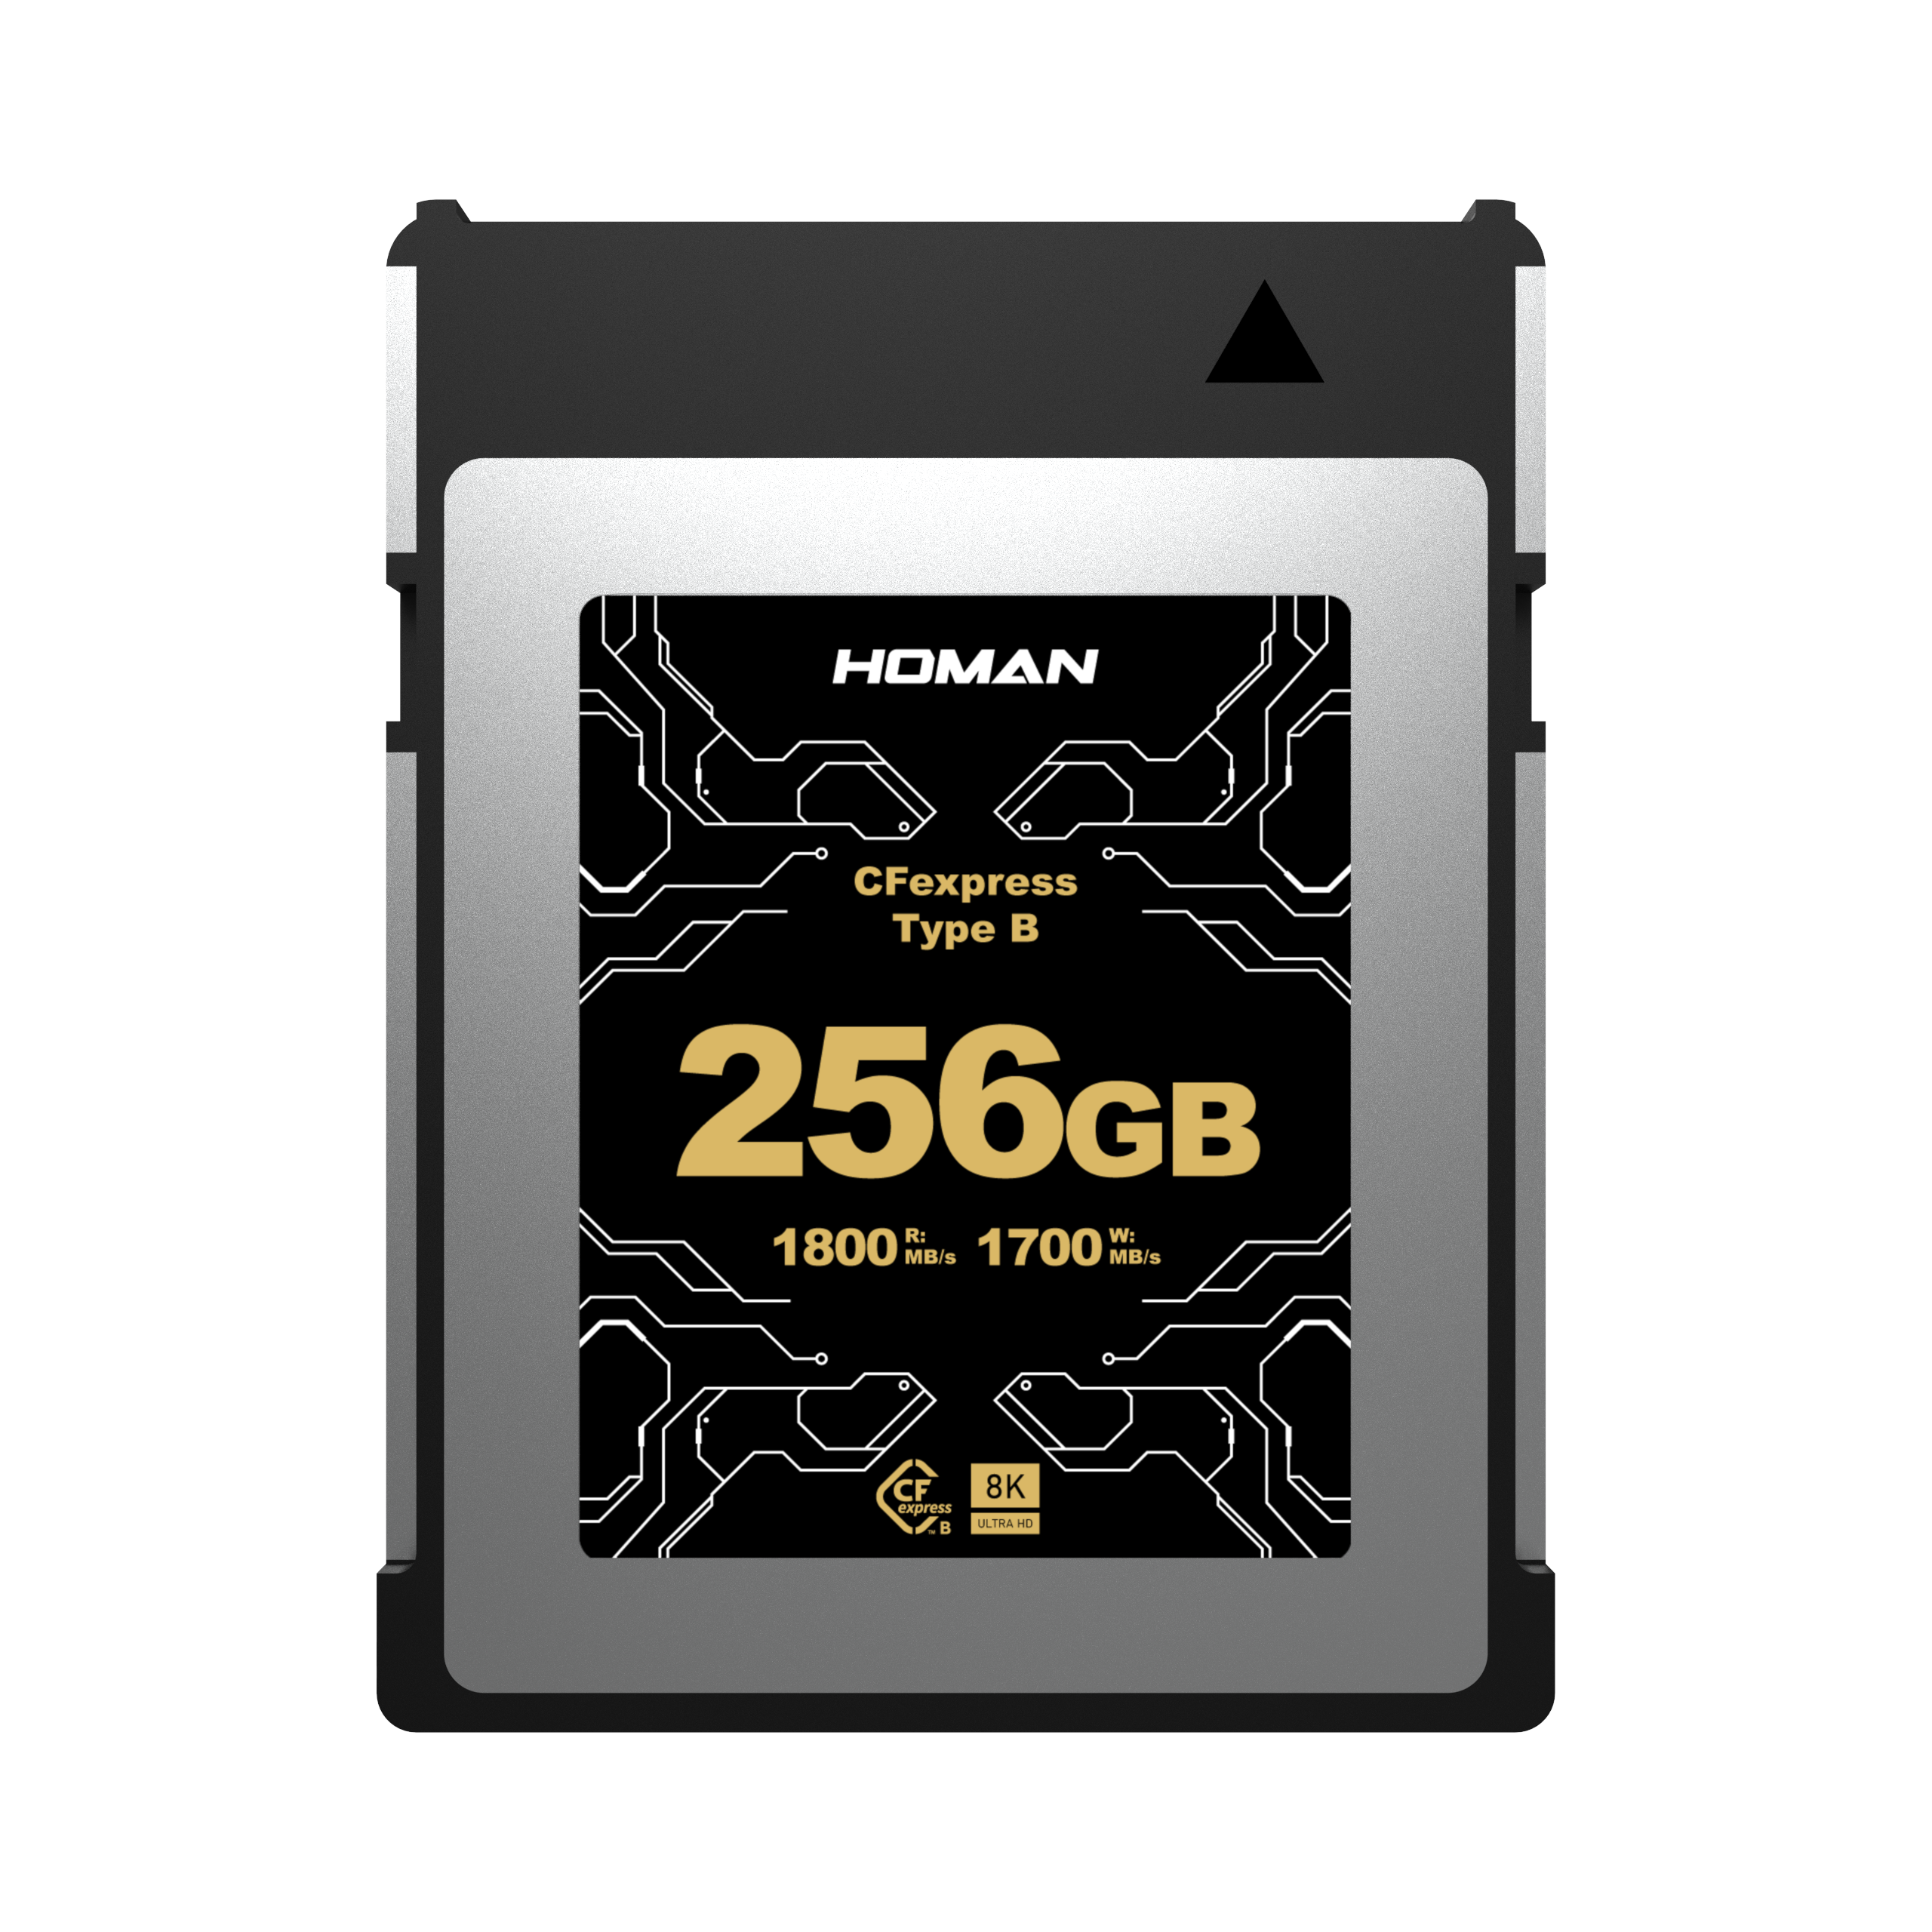 HOMAN CFexpress Card Type B 256GB